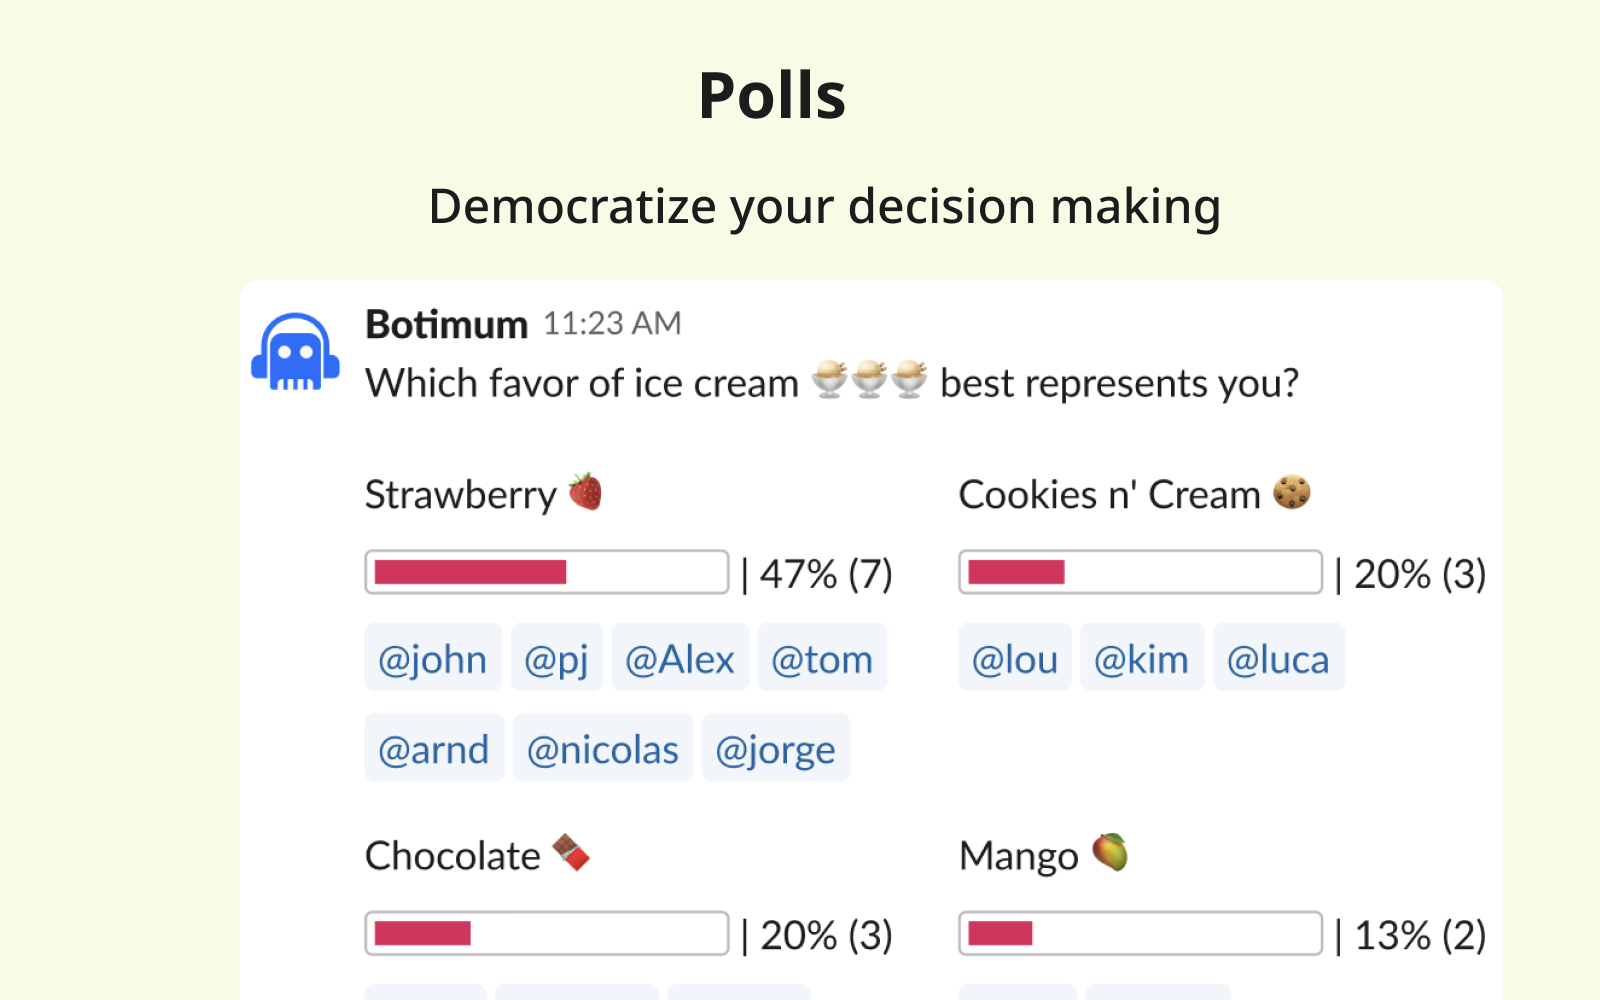 A poll with Slackbot Botimum